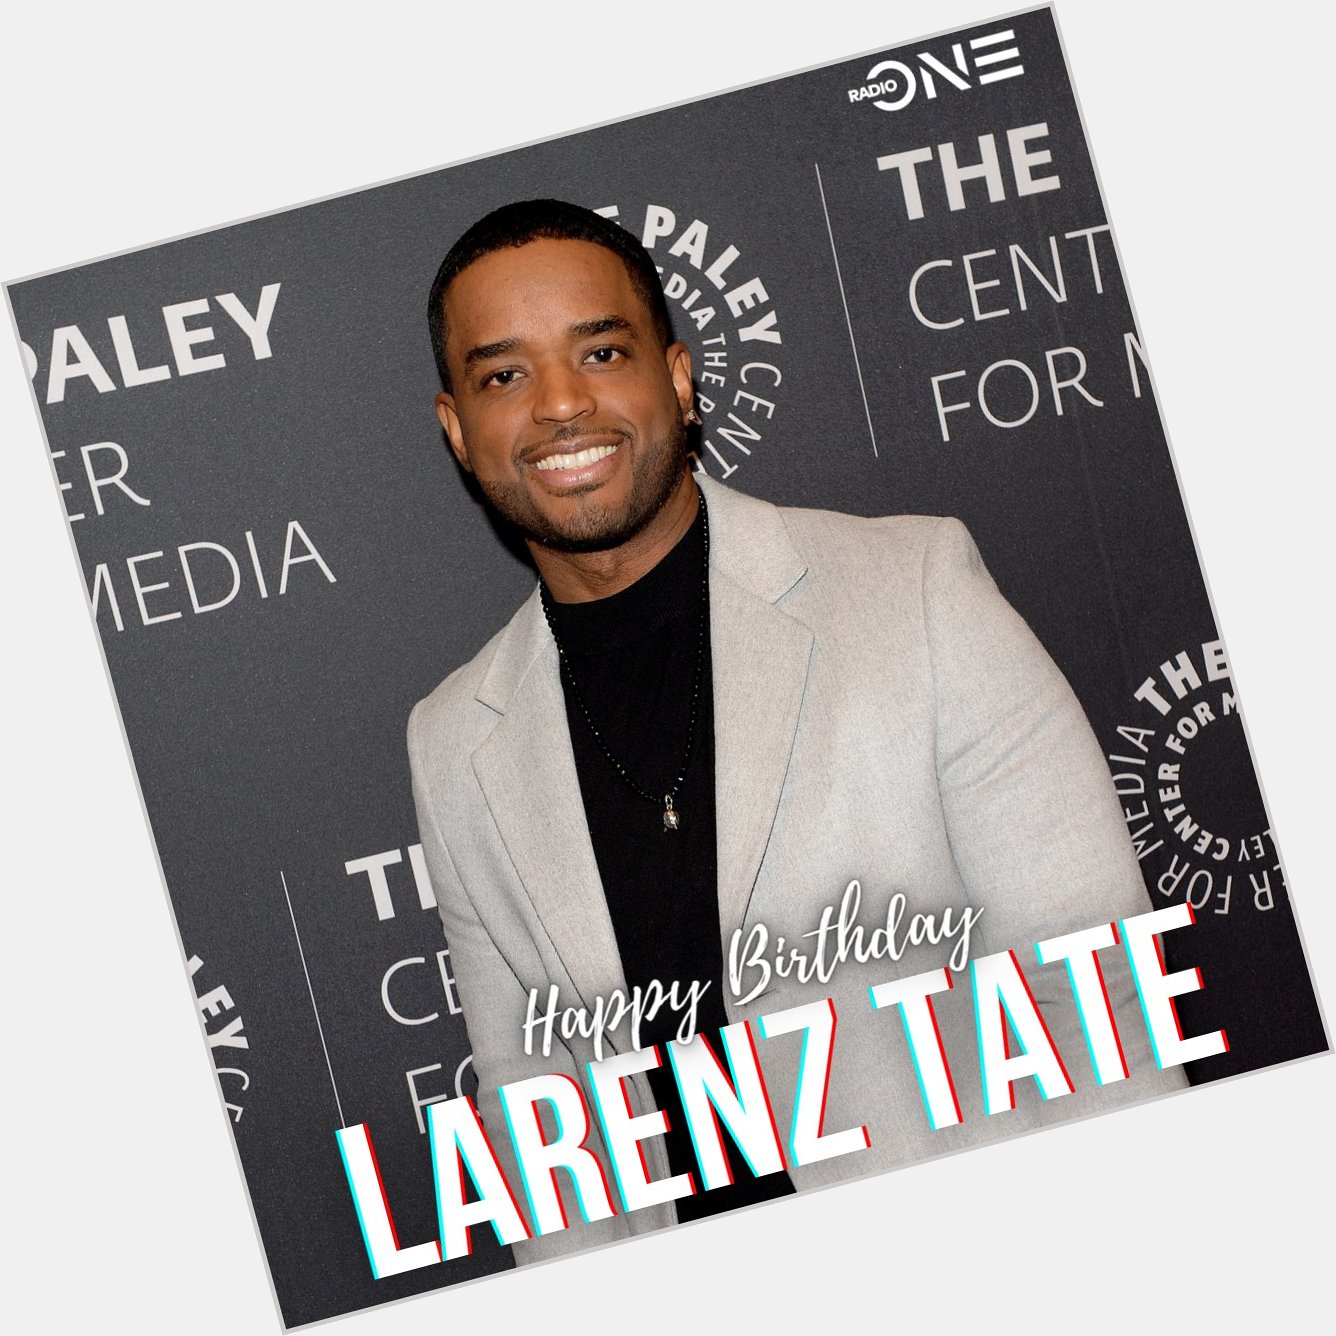 Wishing actor Larenz Tate a Happy Birthday! 